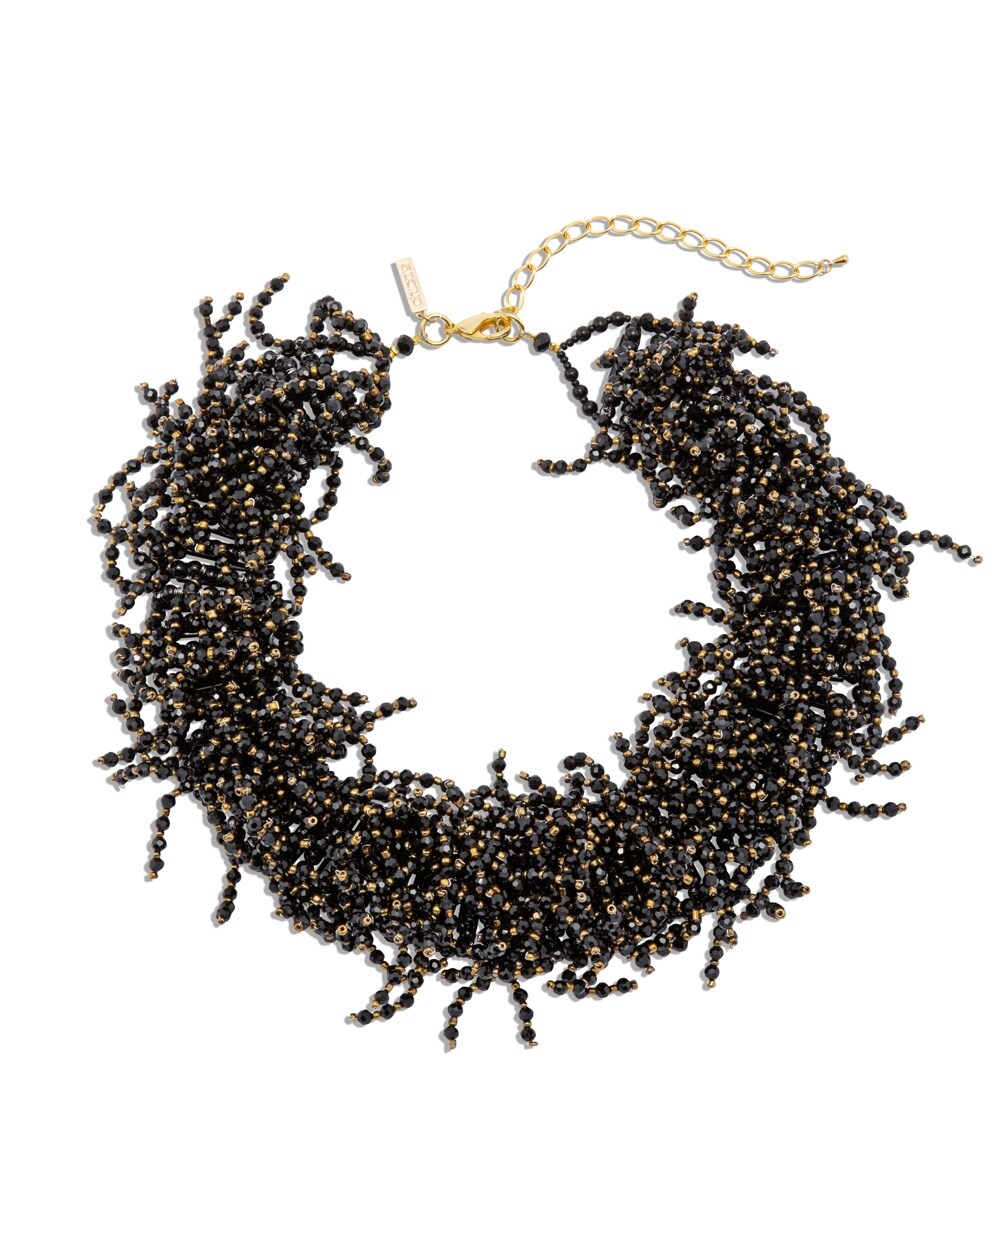 The Collectibles Noir Garland Necklace